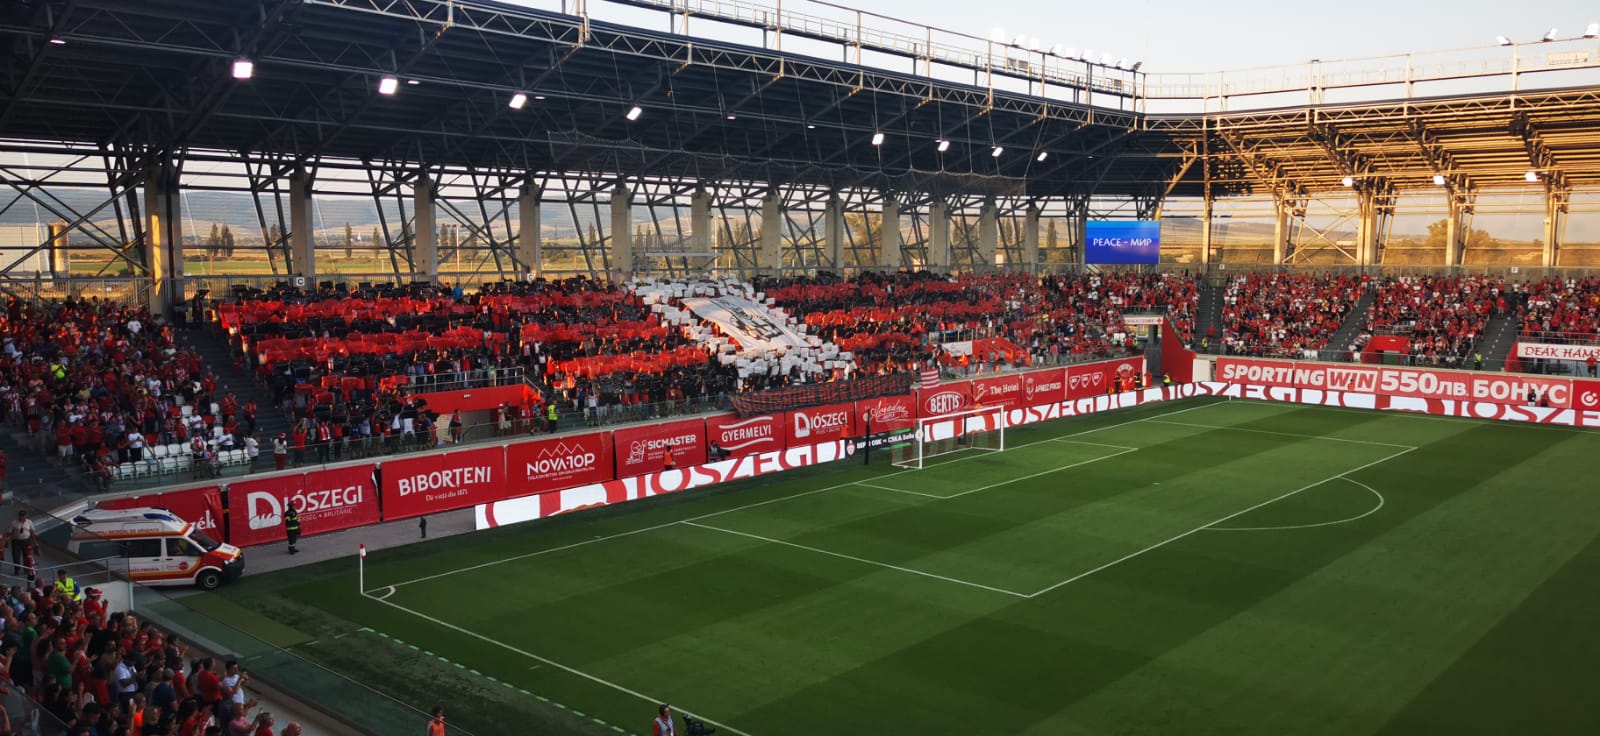 Fanii lui CSKA Sofia, mesaj anti-FCSB la Sf. Gheorghe